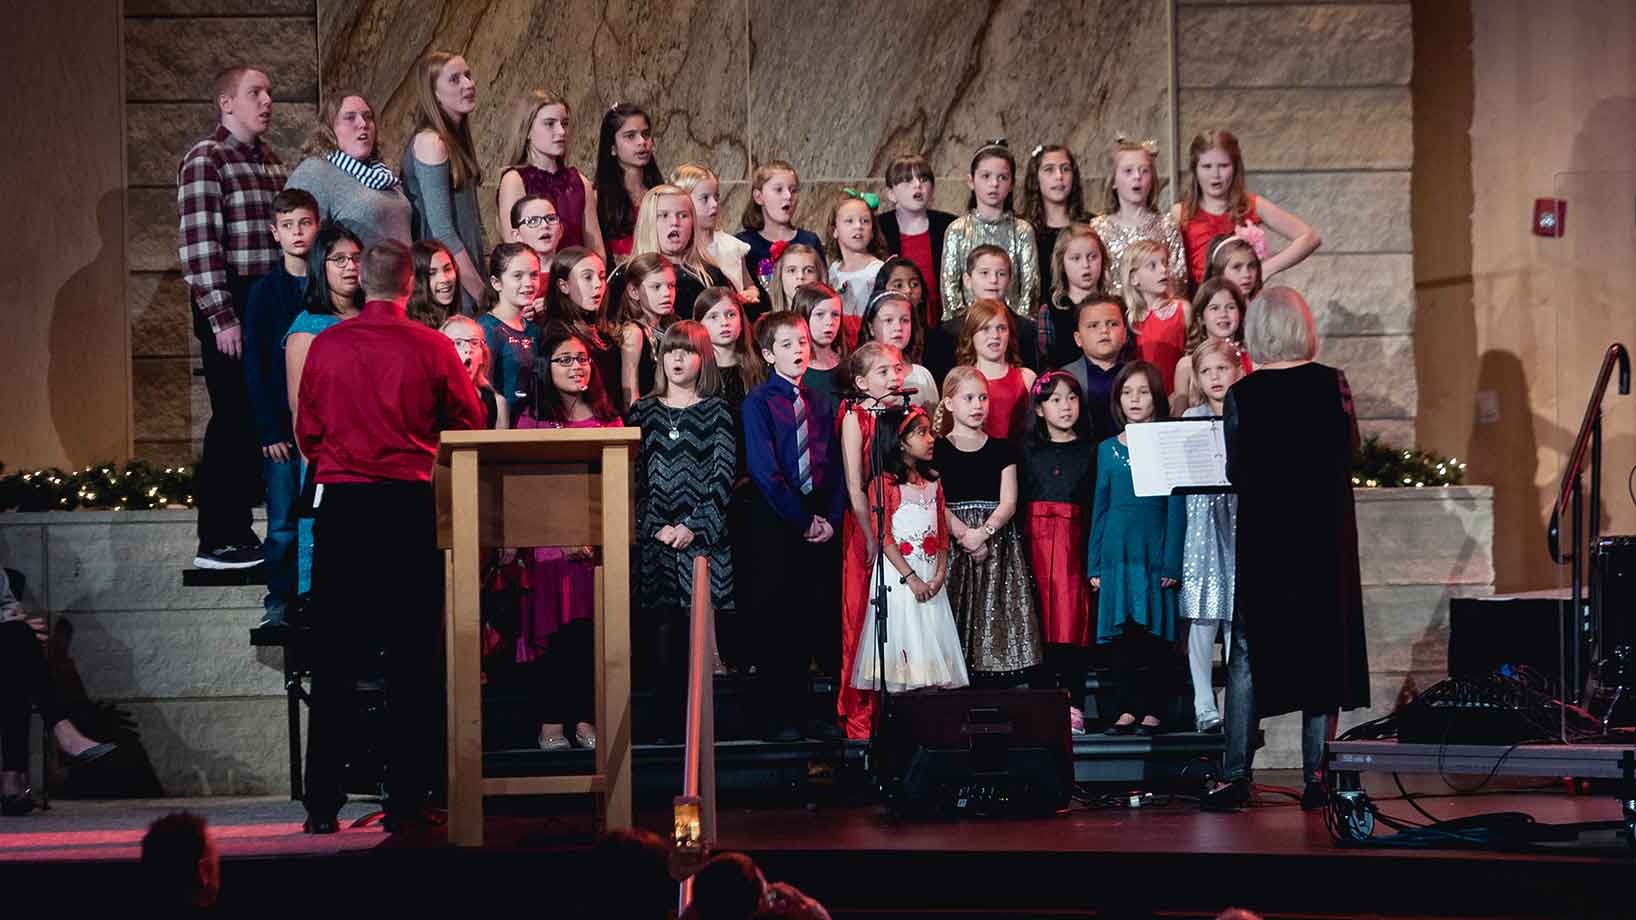 choir singing in the worship center